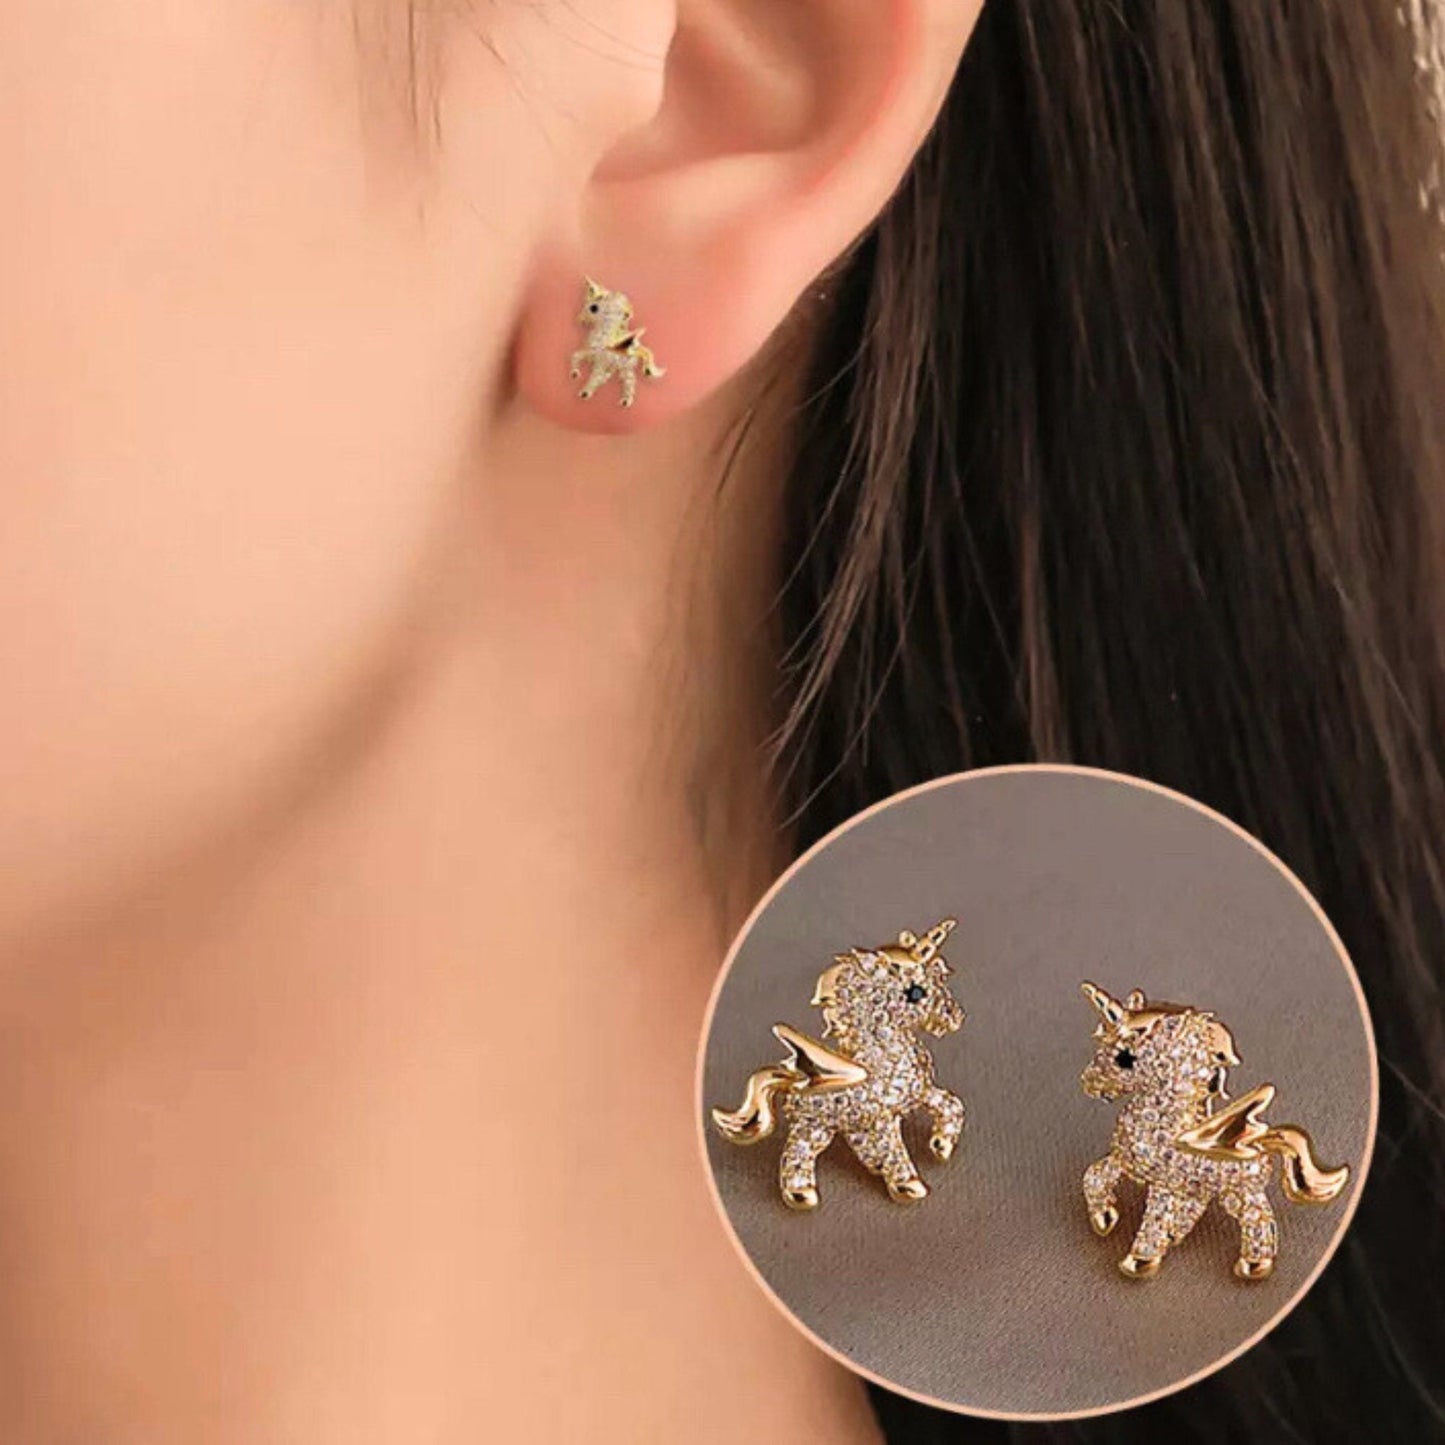 Unicorn stud earrings,Unicorn studs Gold plated unicorn stud earrings flower girl earrings.Animal earring, Tiny unicorn earrings